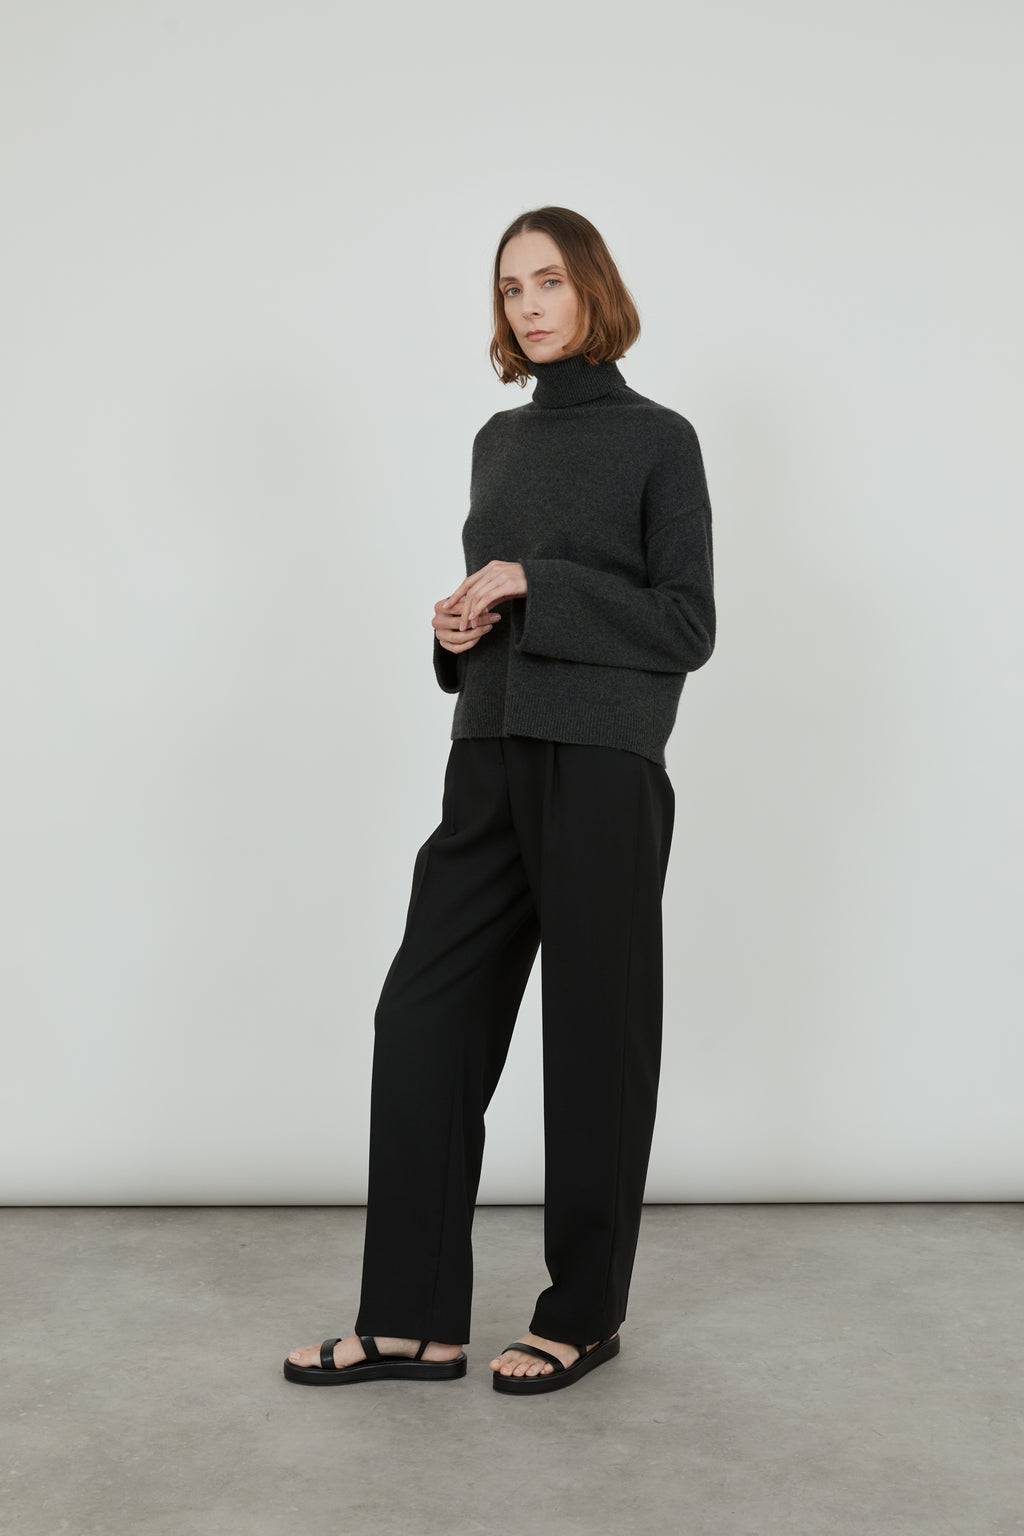 Alicia knit | Dark Grey - Cashmere wool